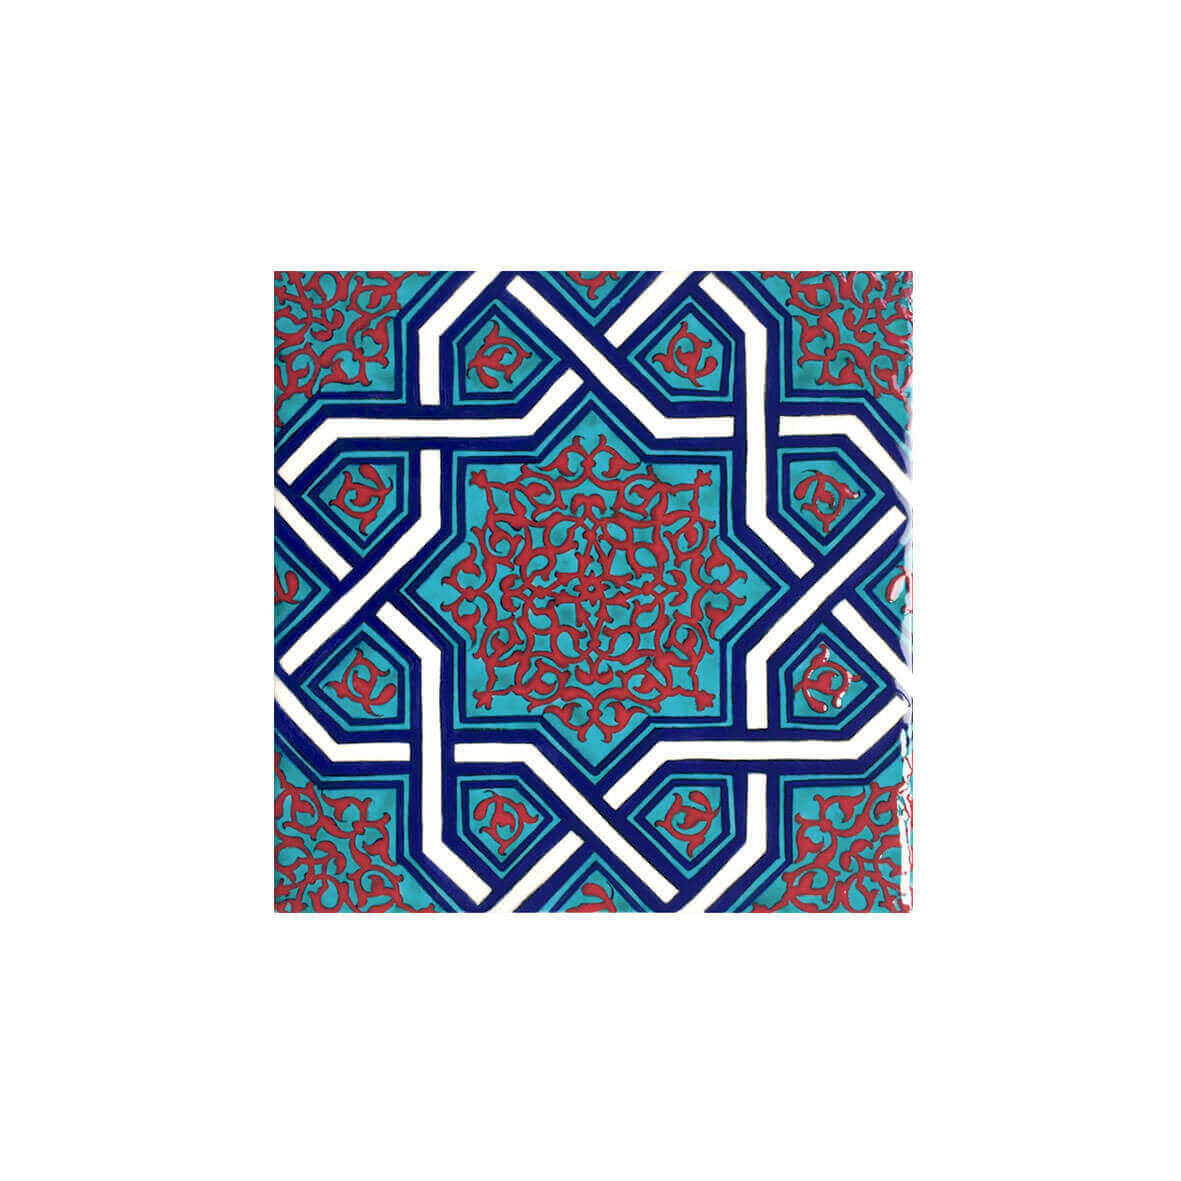 Seljuk Tiles pattern